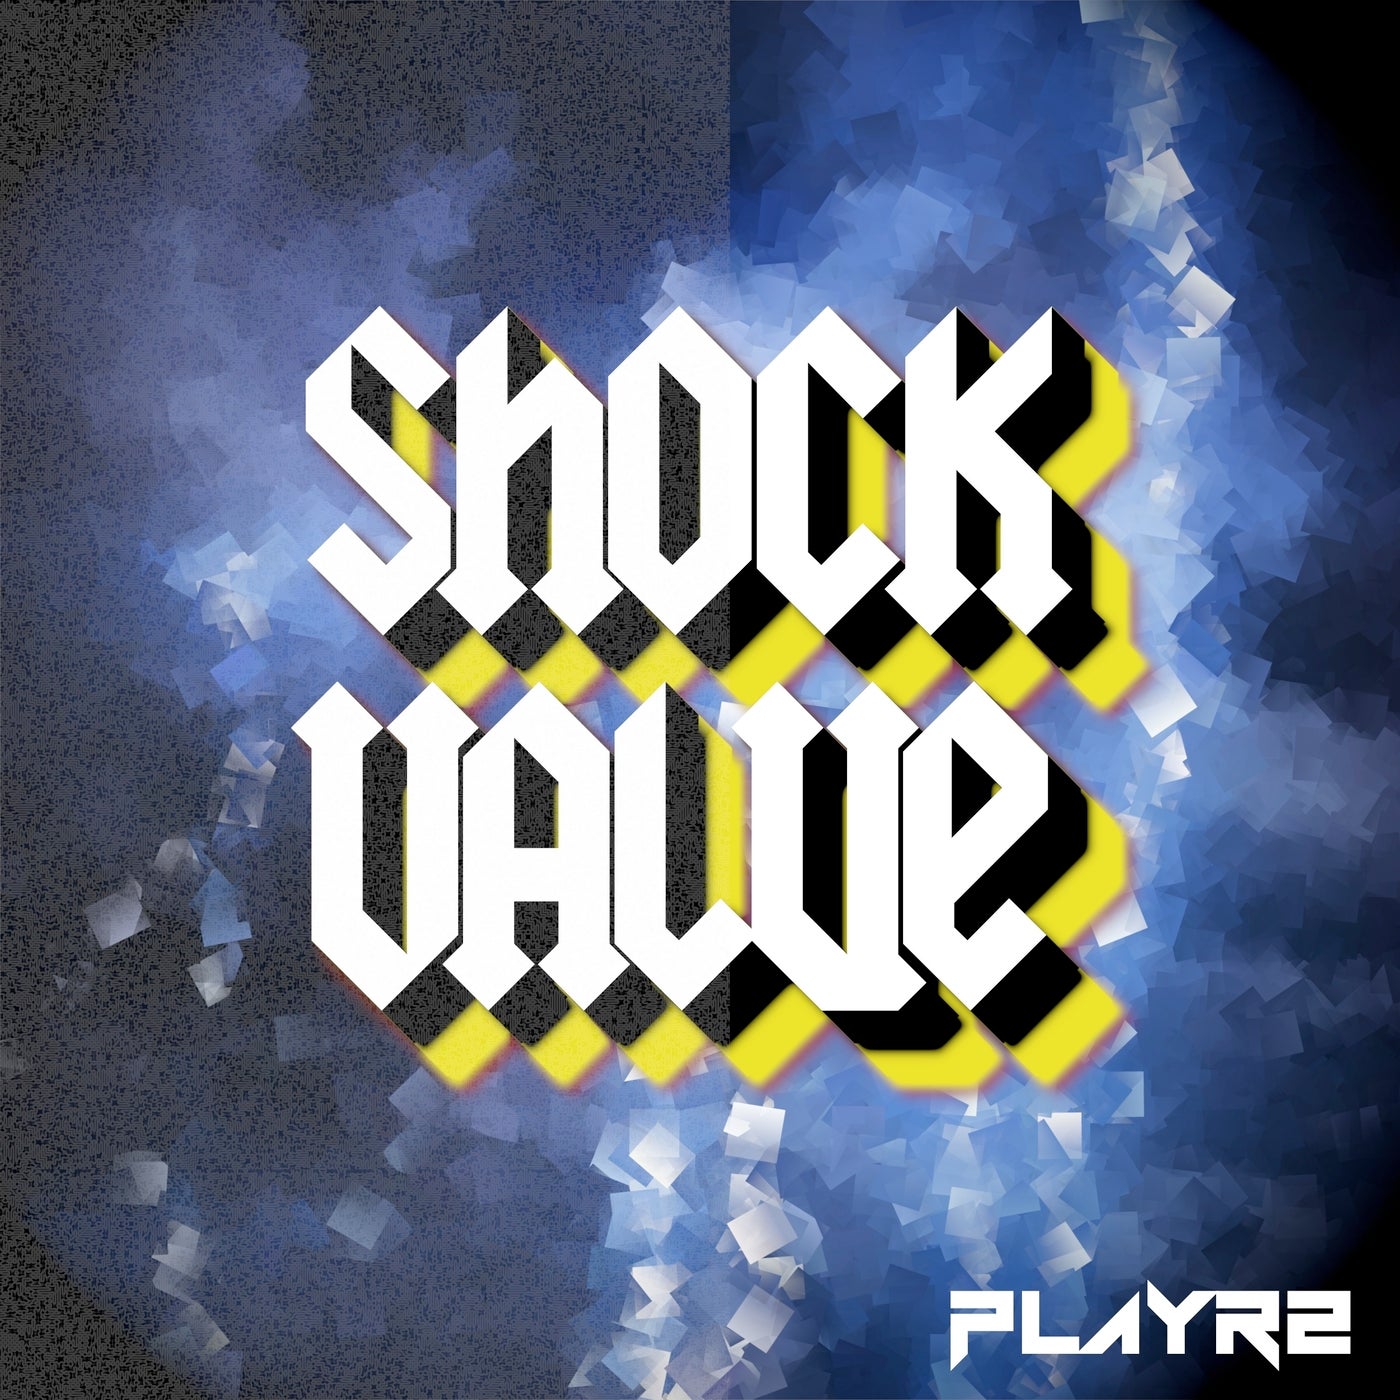 Shock Value